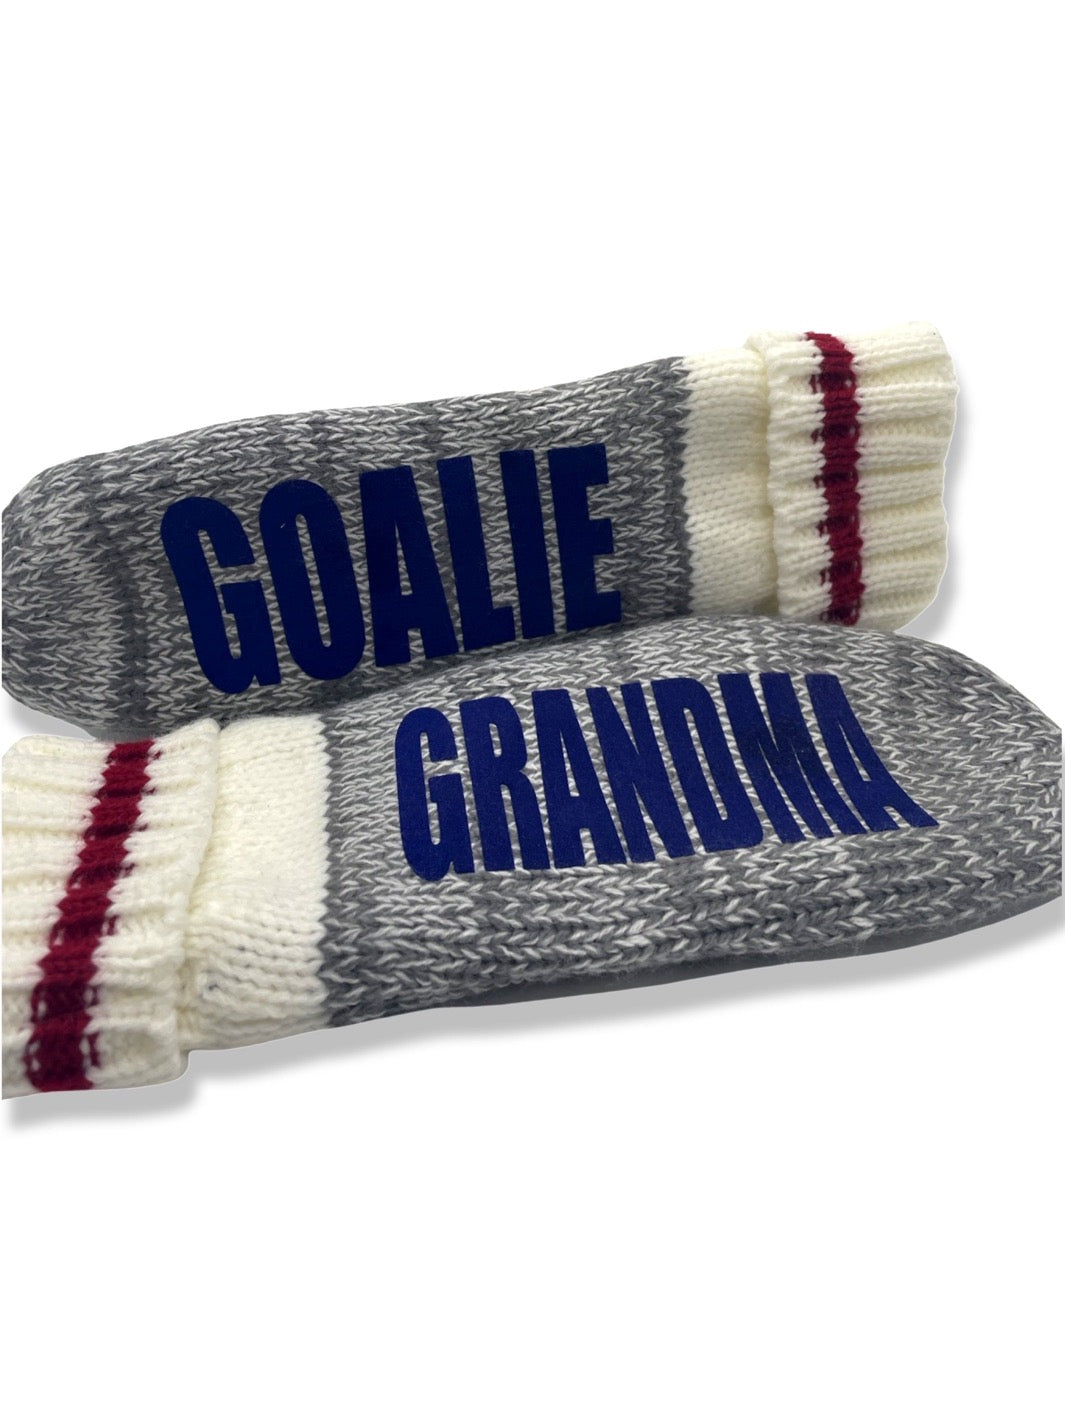 Goalie Grandma Message Mittens